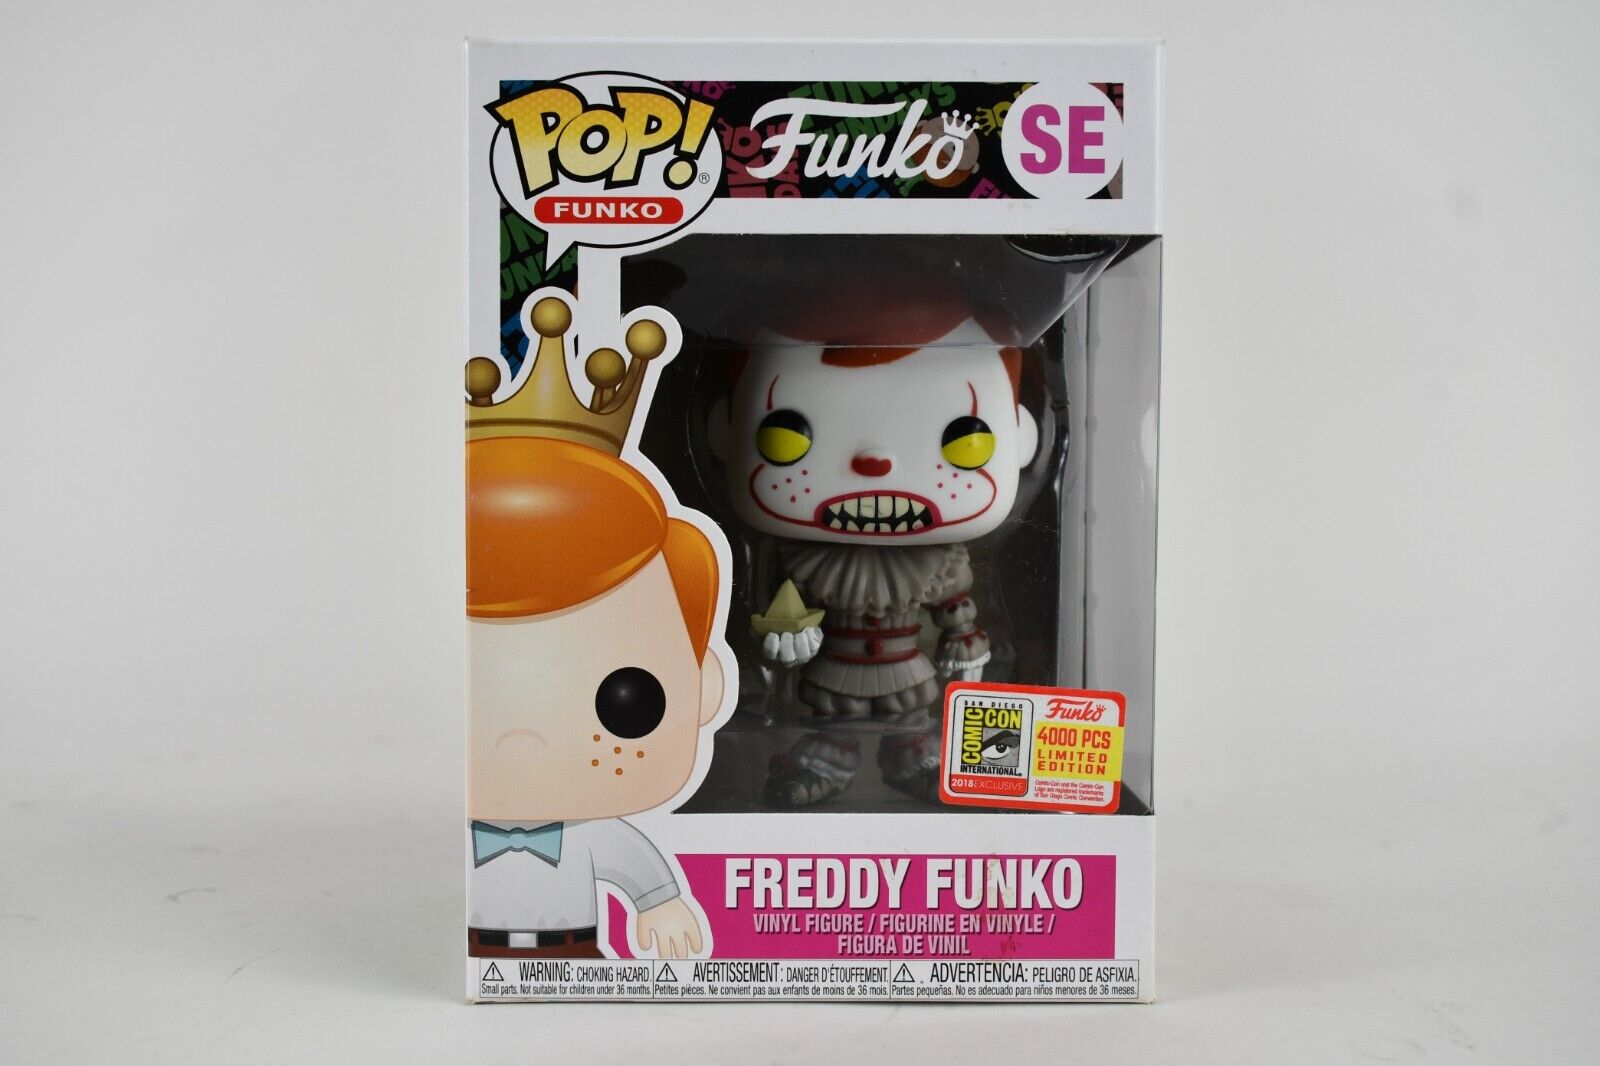 Funko Pop Freddy Funko As Pennywise SE 4000 PCS SDCC 2018 BOX DAMAGE